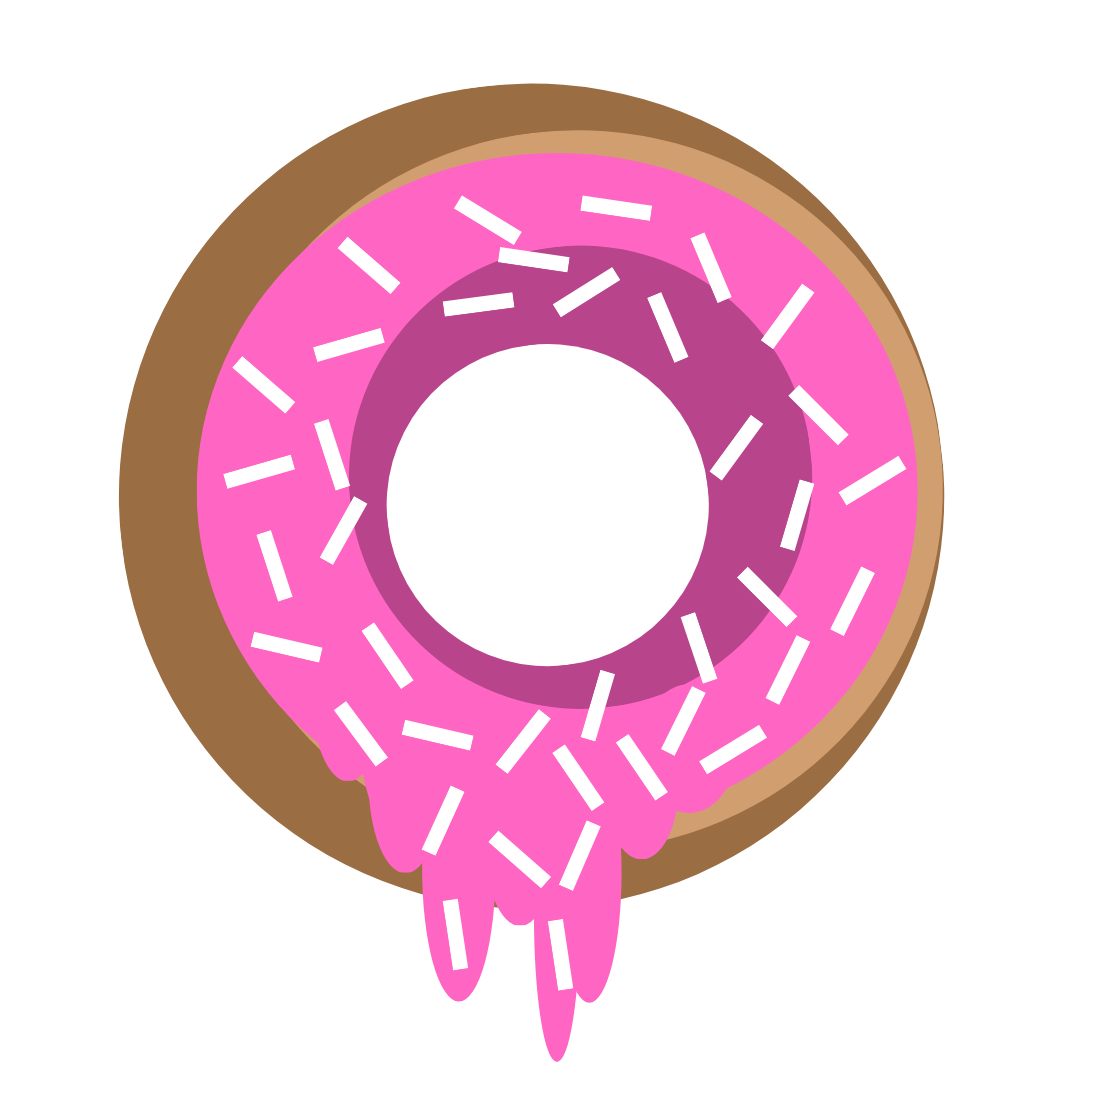 bakery logo cover image.